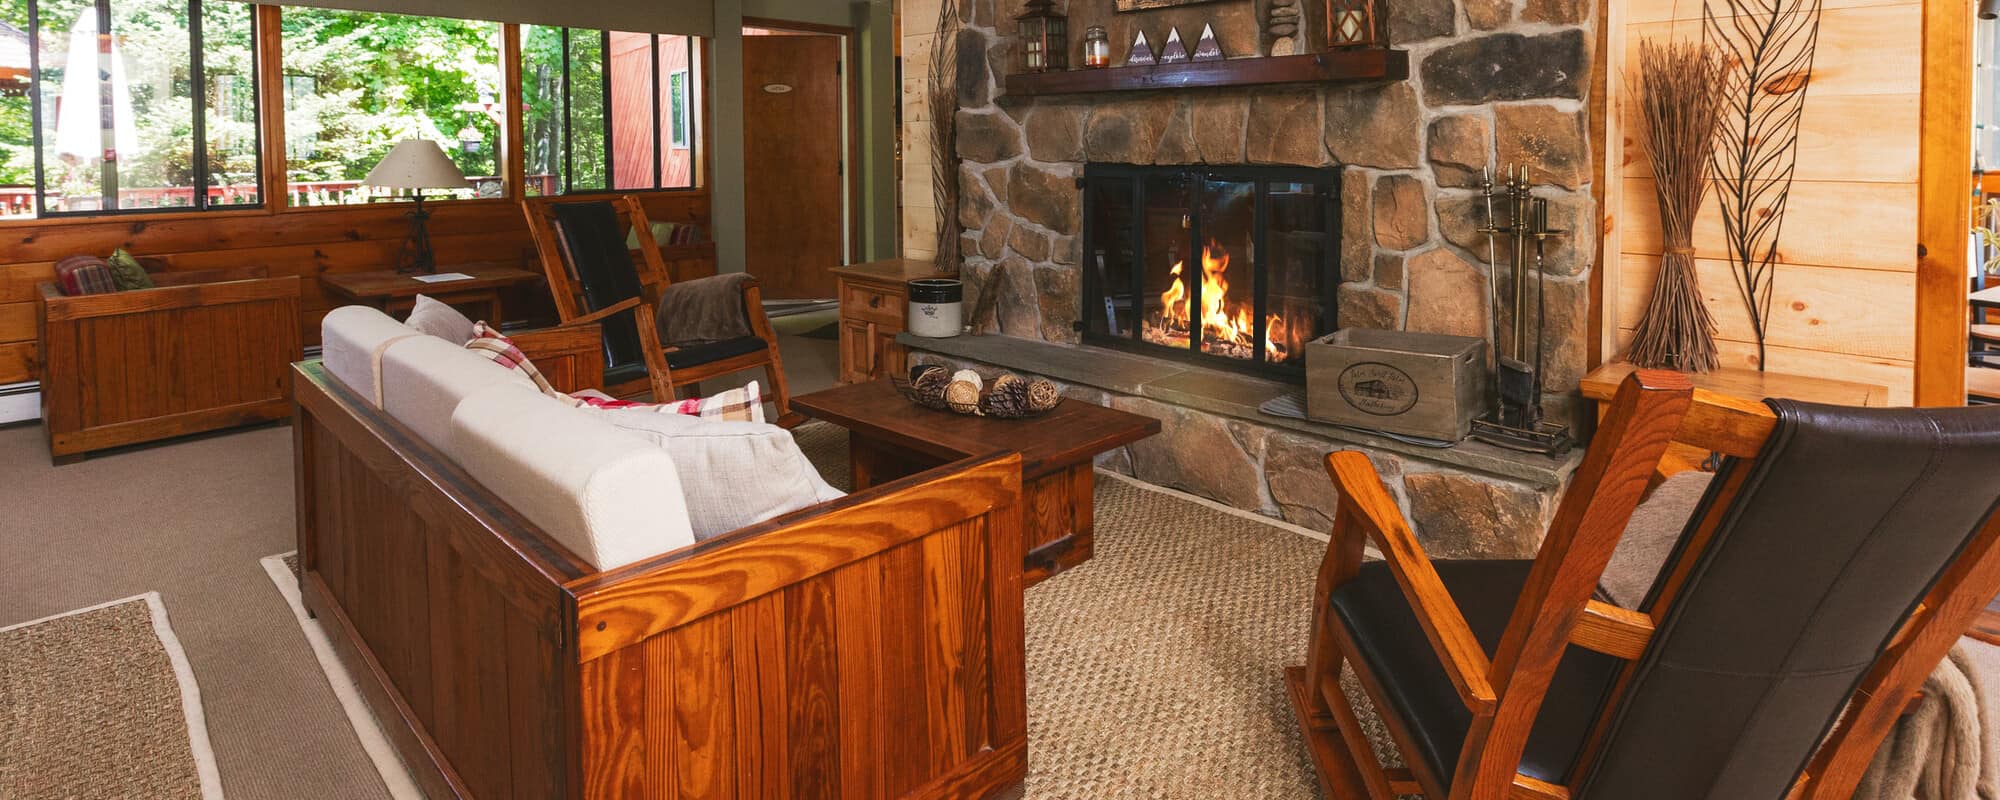 Snowed Inn - Lobby Fireplace